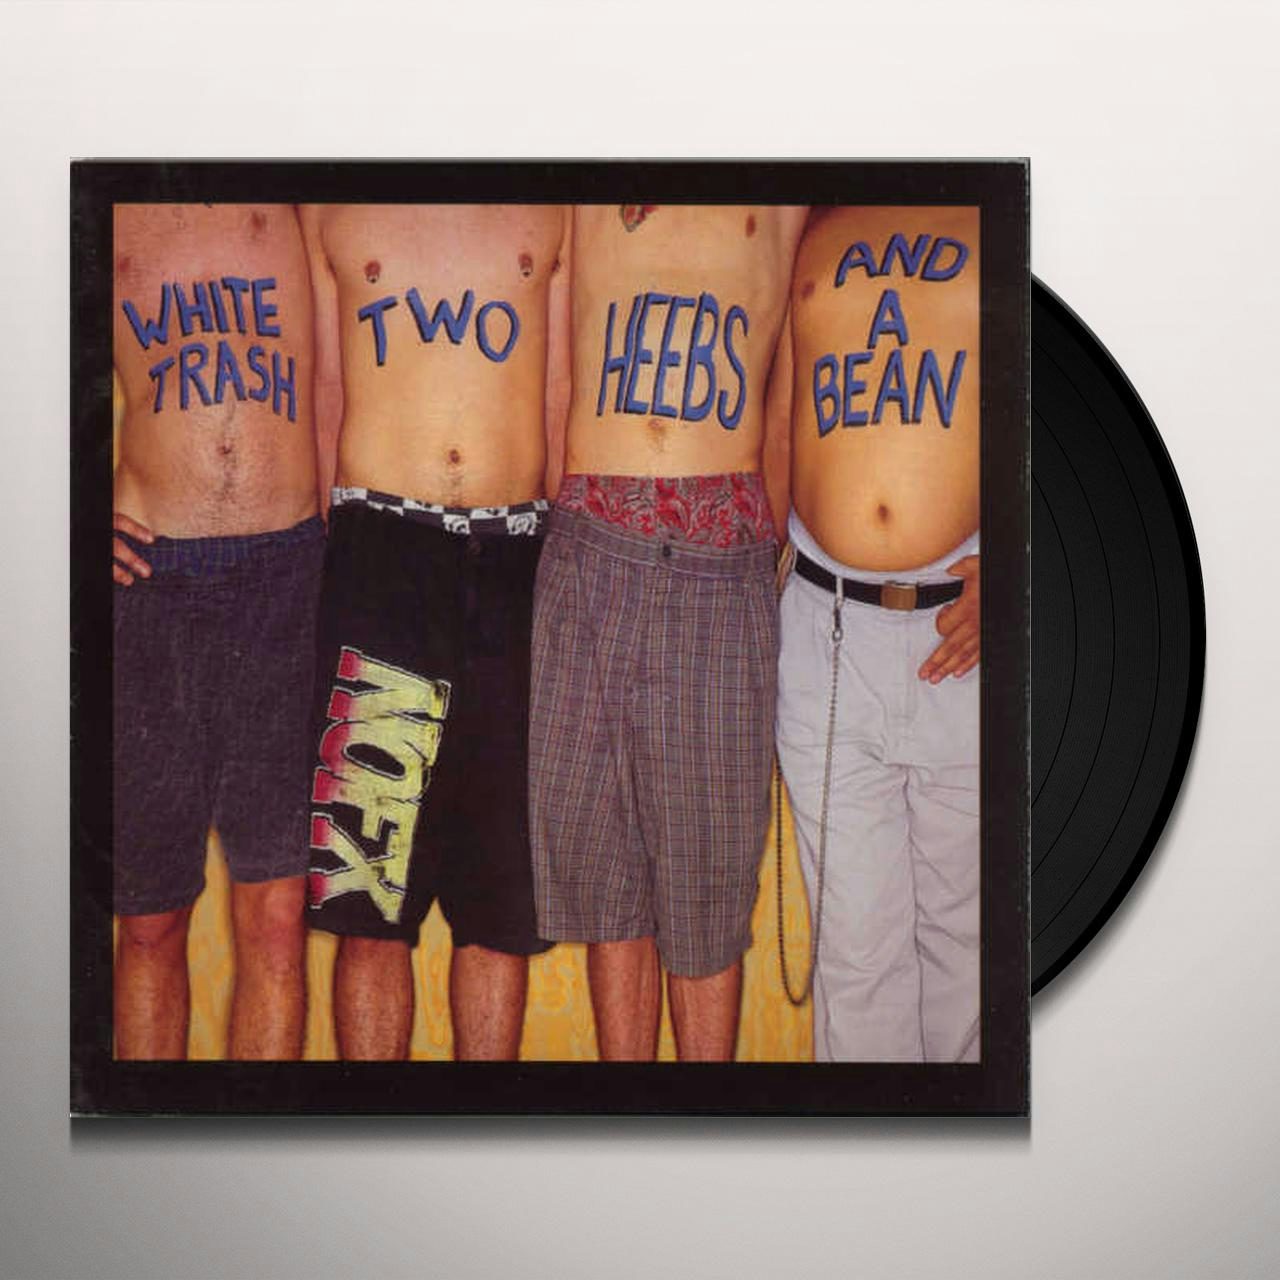 WHITE TRASH TWO HEEBS Vinyl Record - NOFX